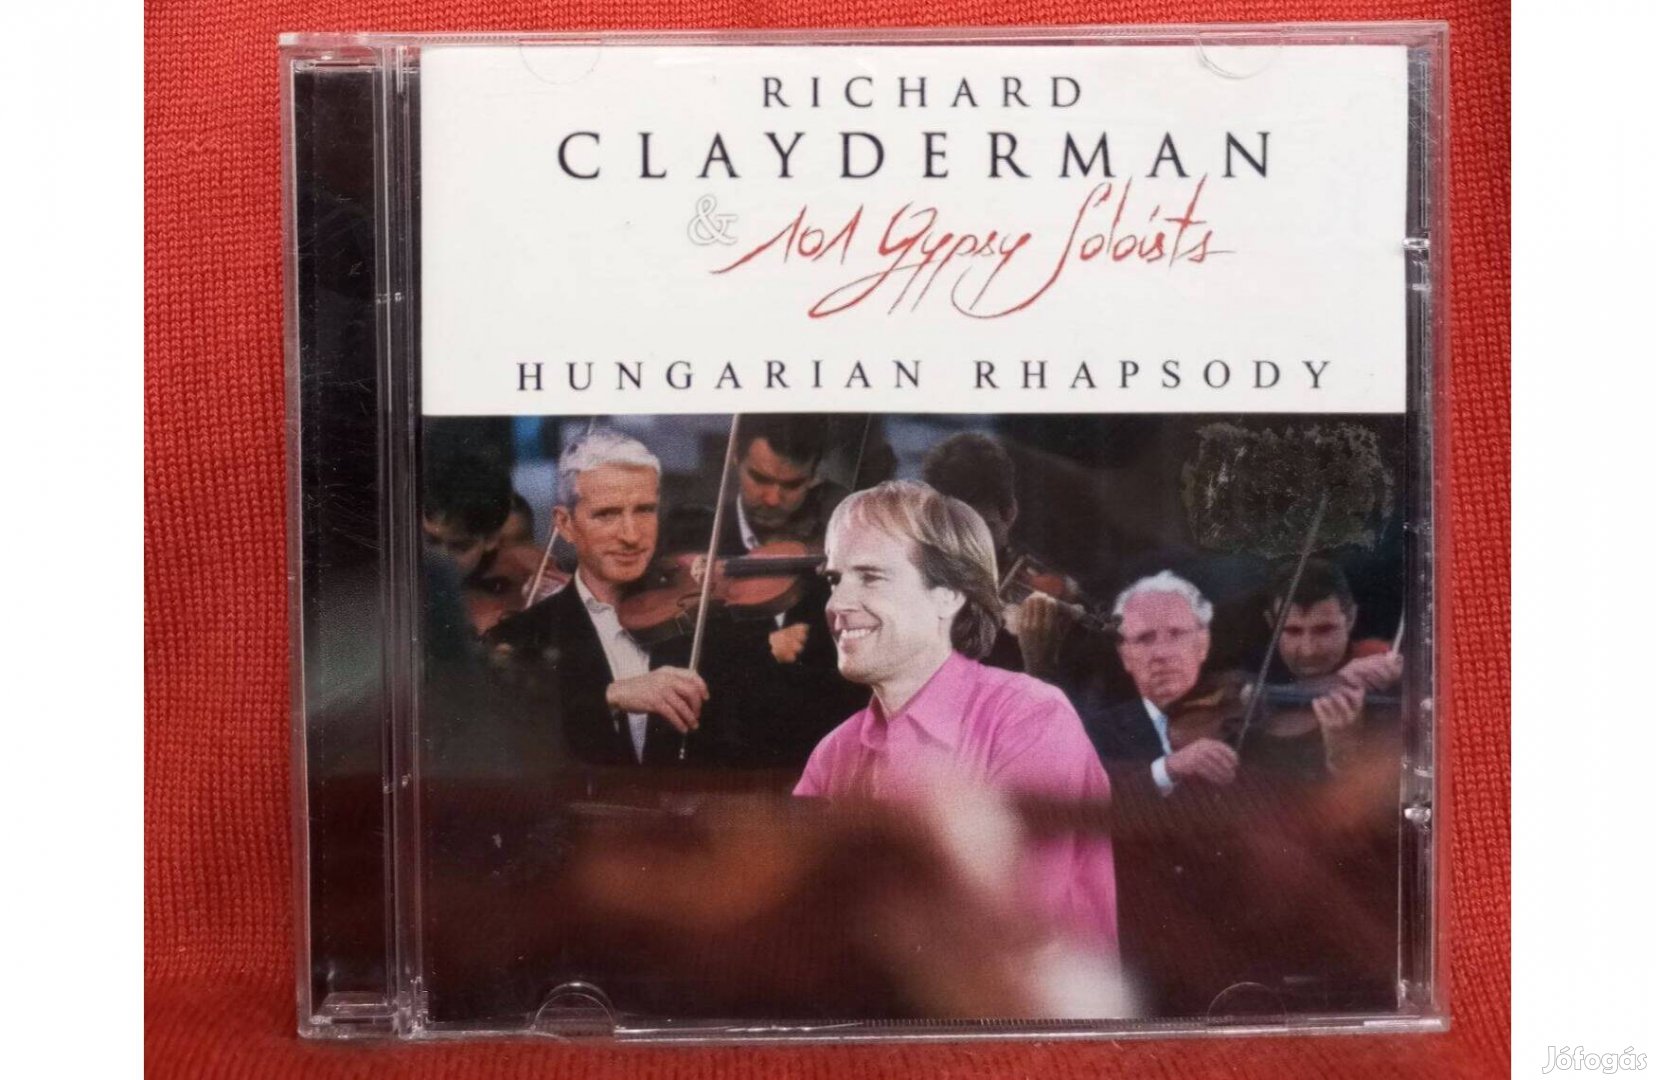 Richard Clayderman - Hungarian Rhapsody CD